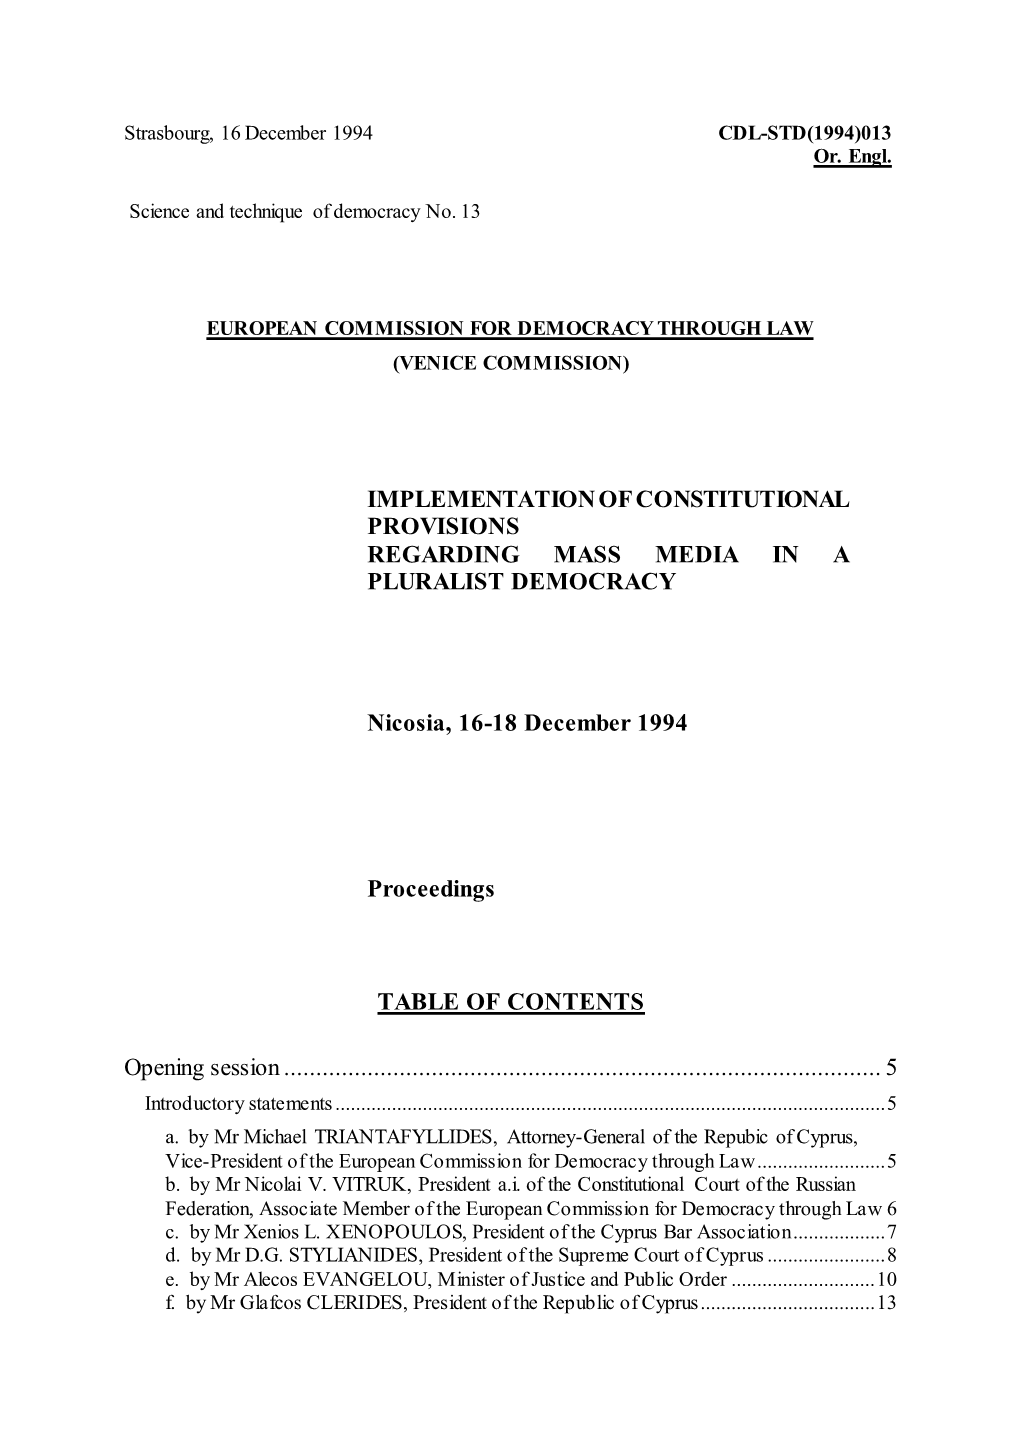 IMPLEMENTATION of CONSTITUTIONAL PROVISIONS REGARDING MASS MEDIA in a PLURALIST DEMOCRACY Nicosia, 16-18 December 1994 Proceedi